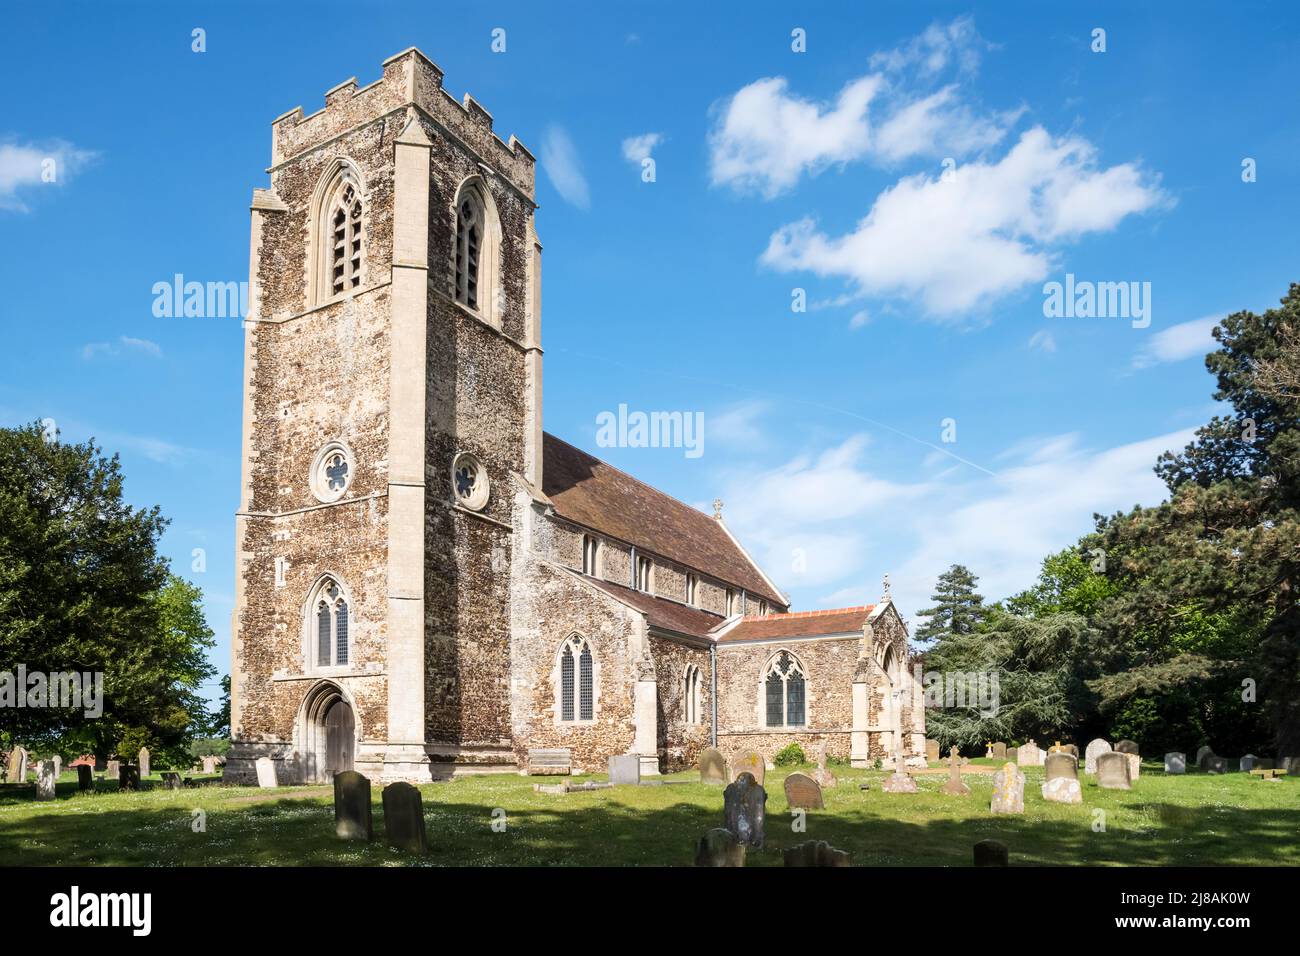 The mediaeval or medieval Church of St Peter, Wolferton on the Sandringham Estate in Norfolk. Stock Photo